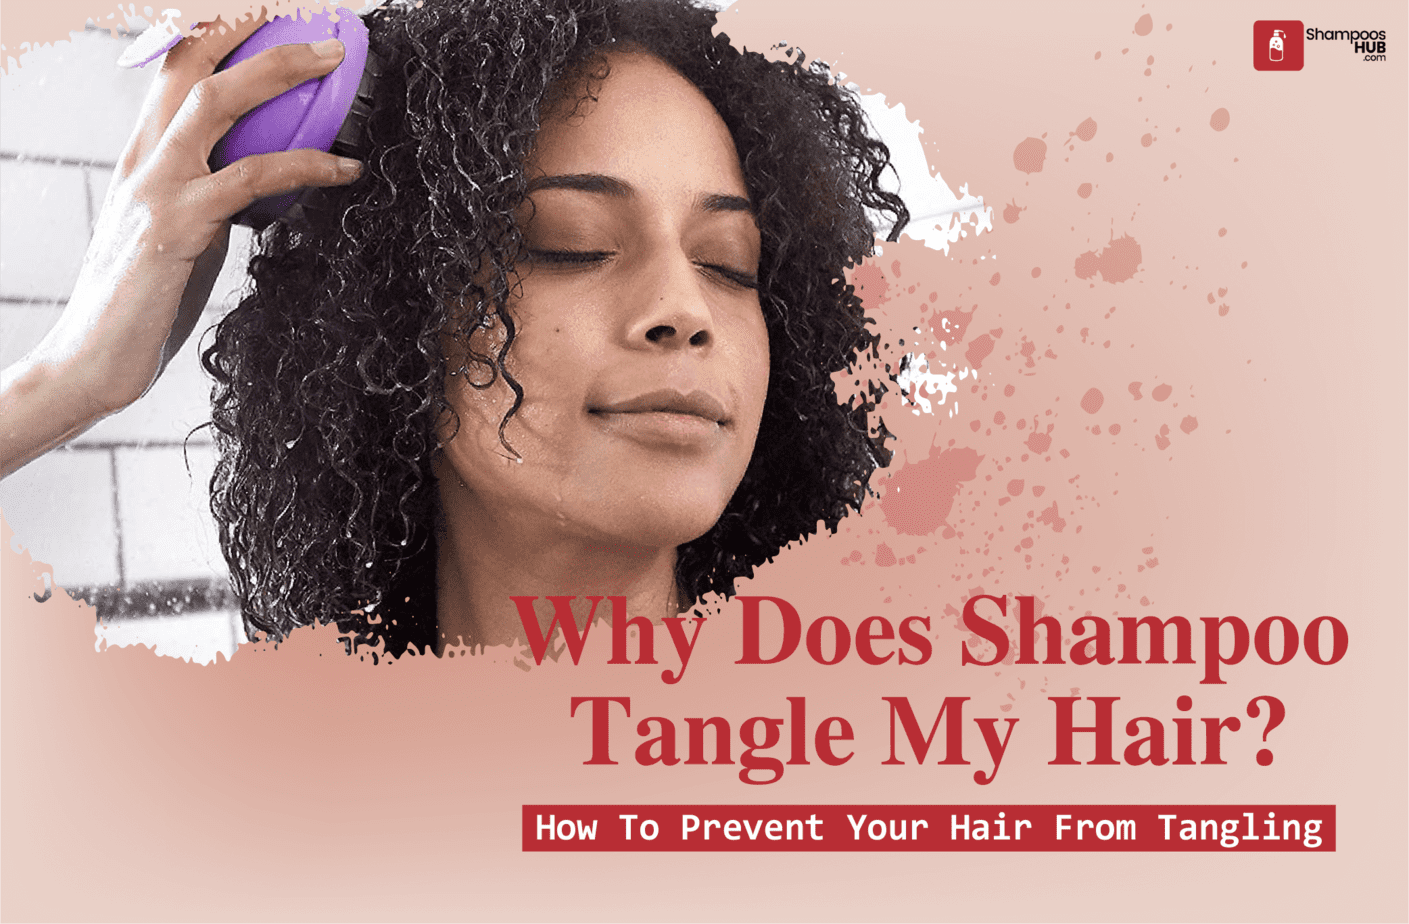 Why Does Shampoo Tangle My Hair?